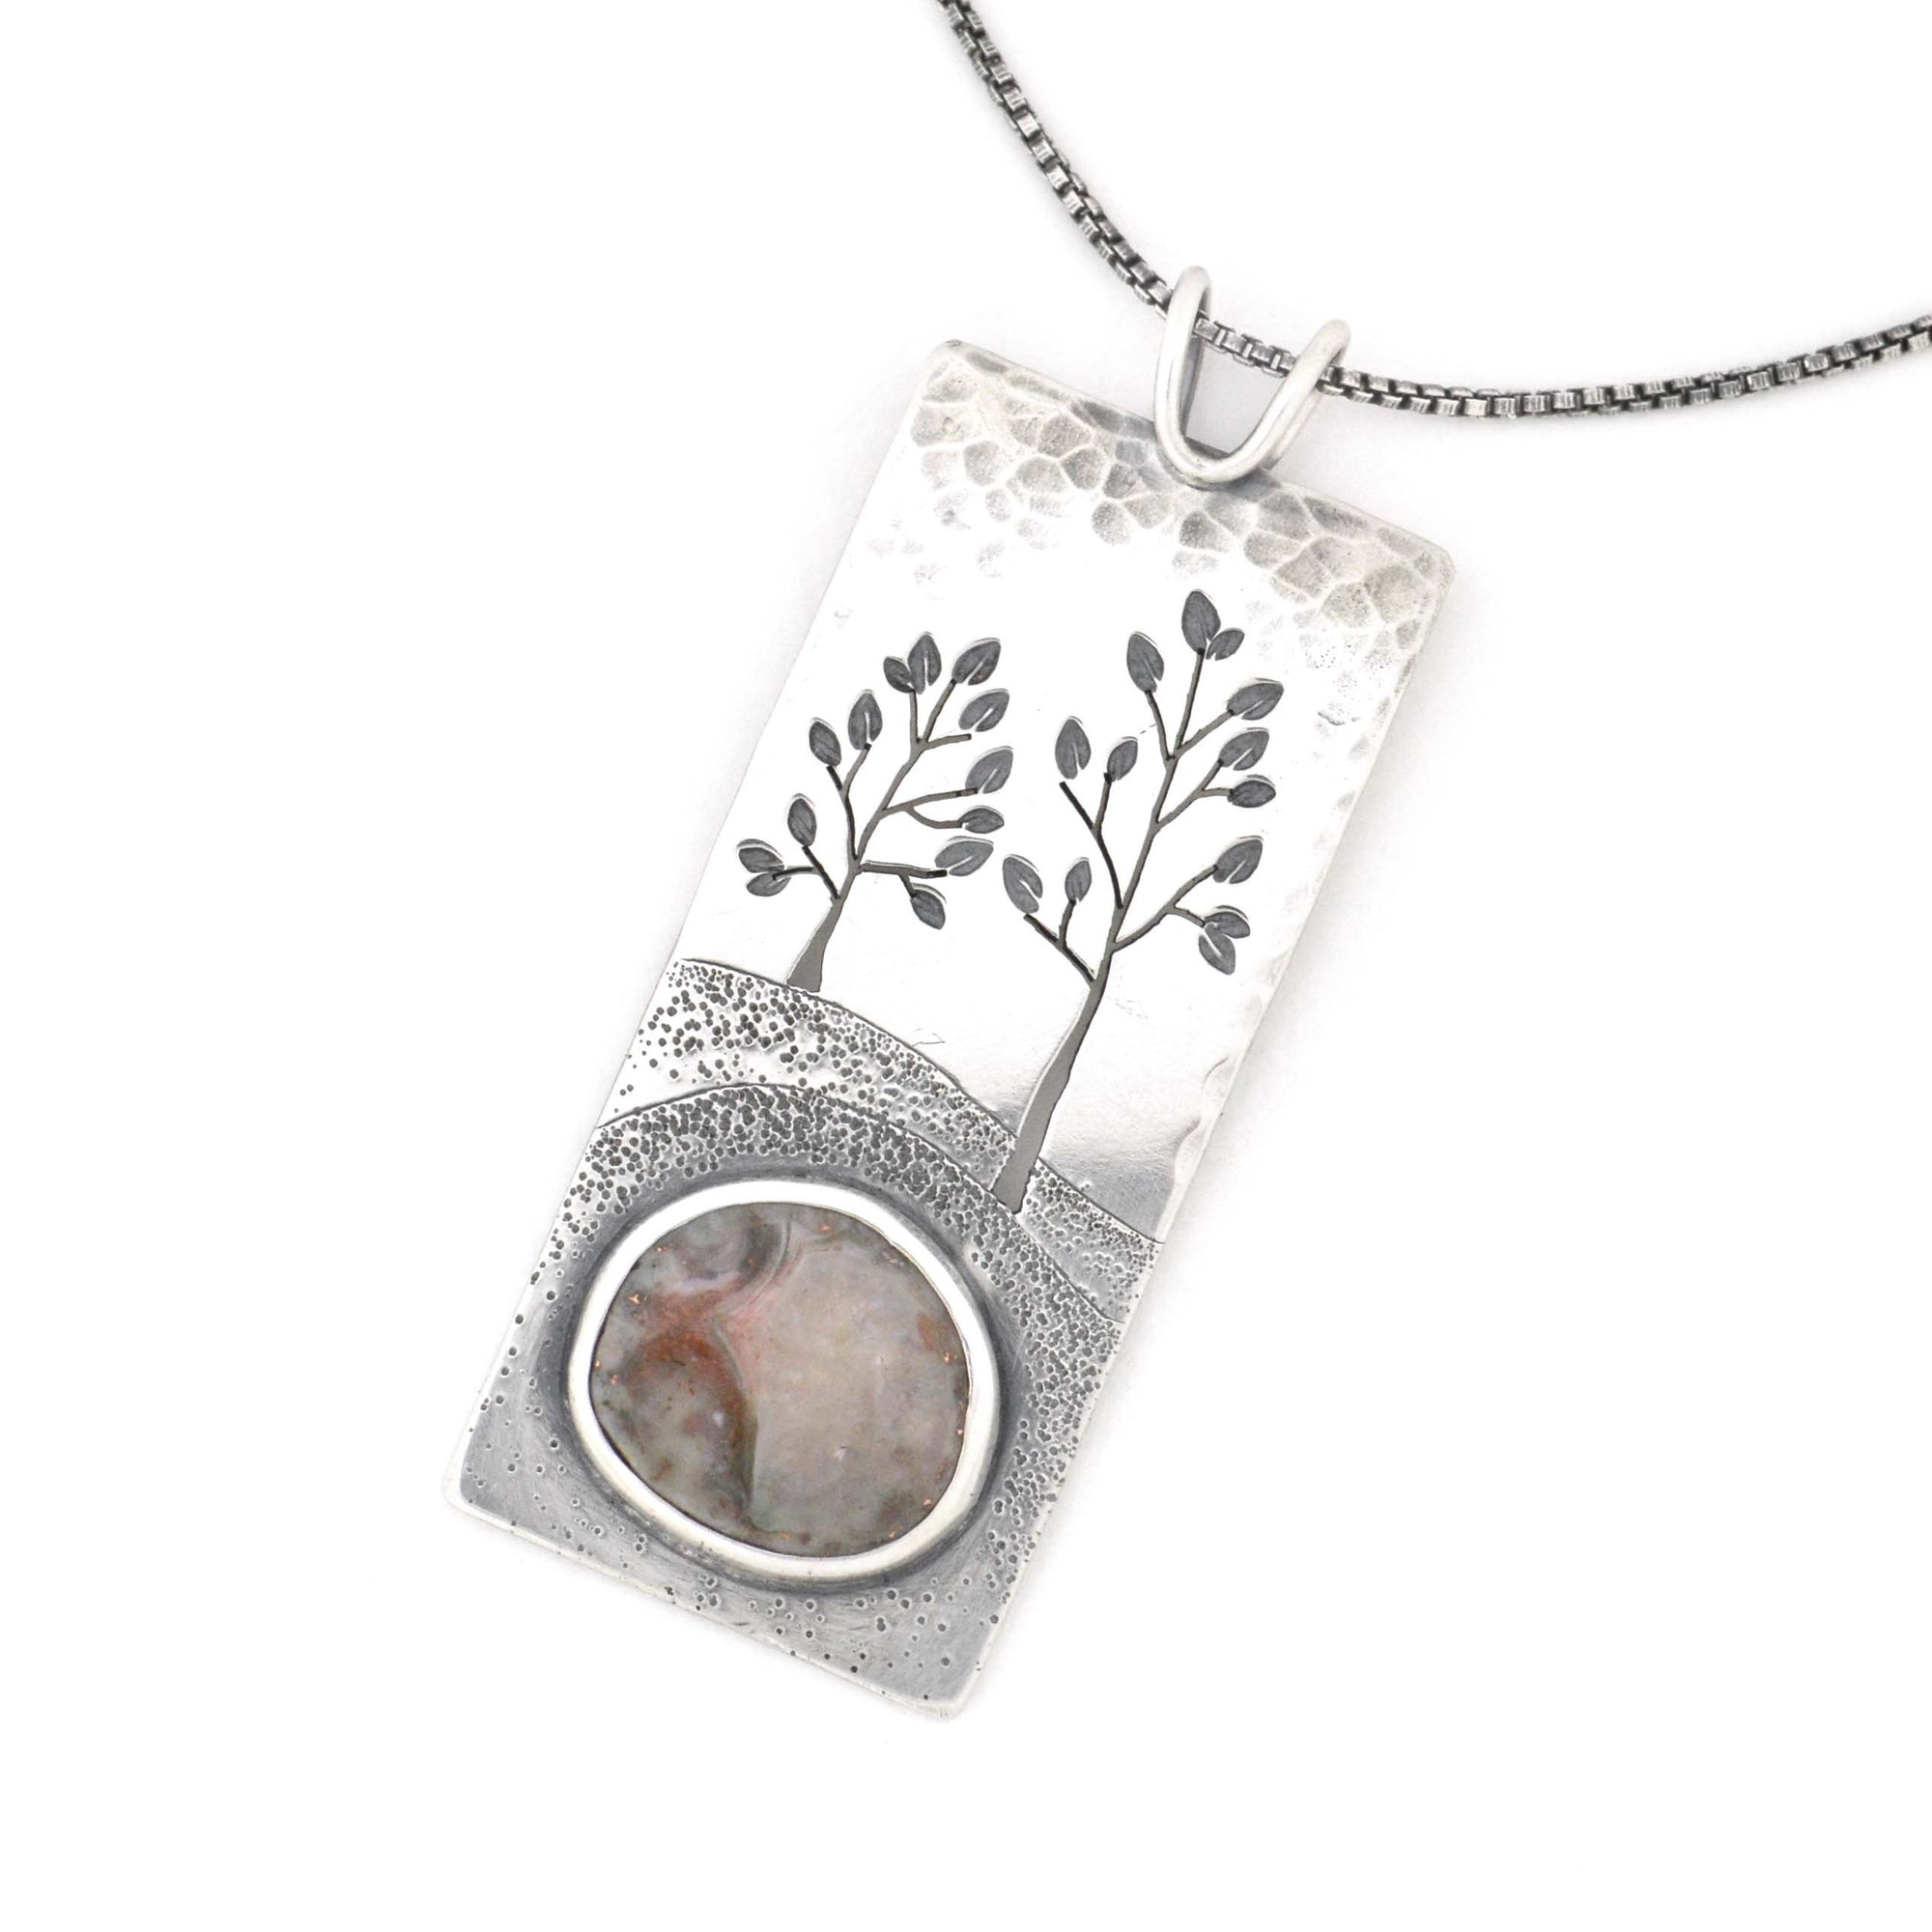 Summer Clouds Wonderland Pendant - Silver Pendant   3832 - handmade by Beth Millner Jewelry